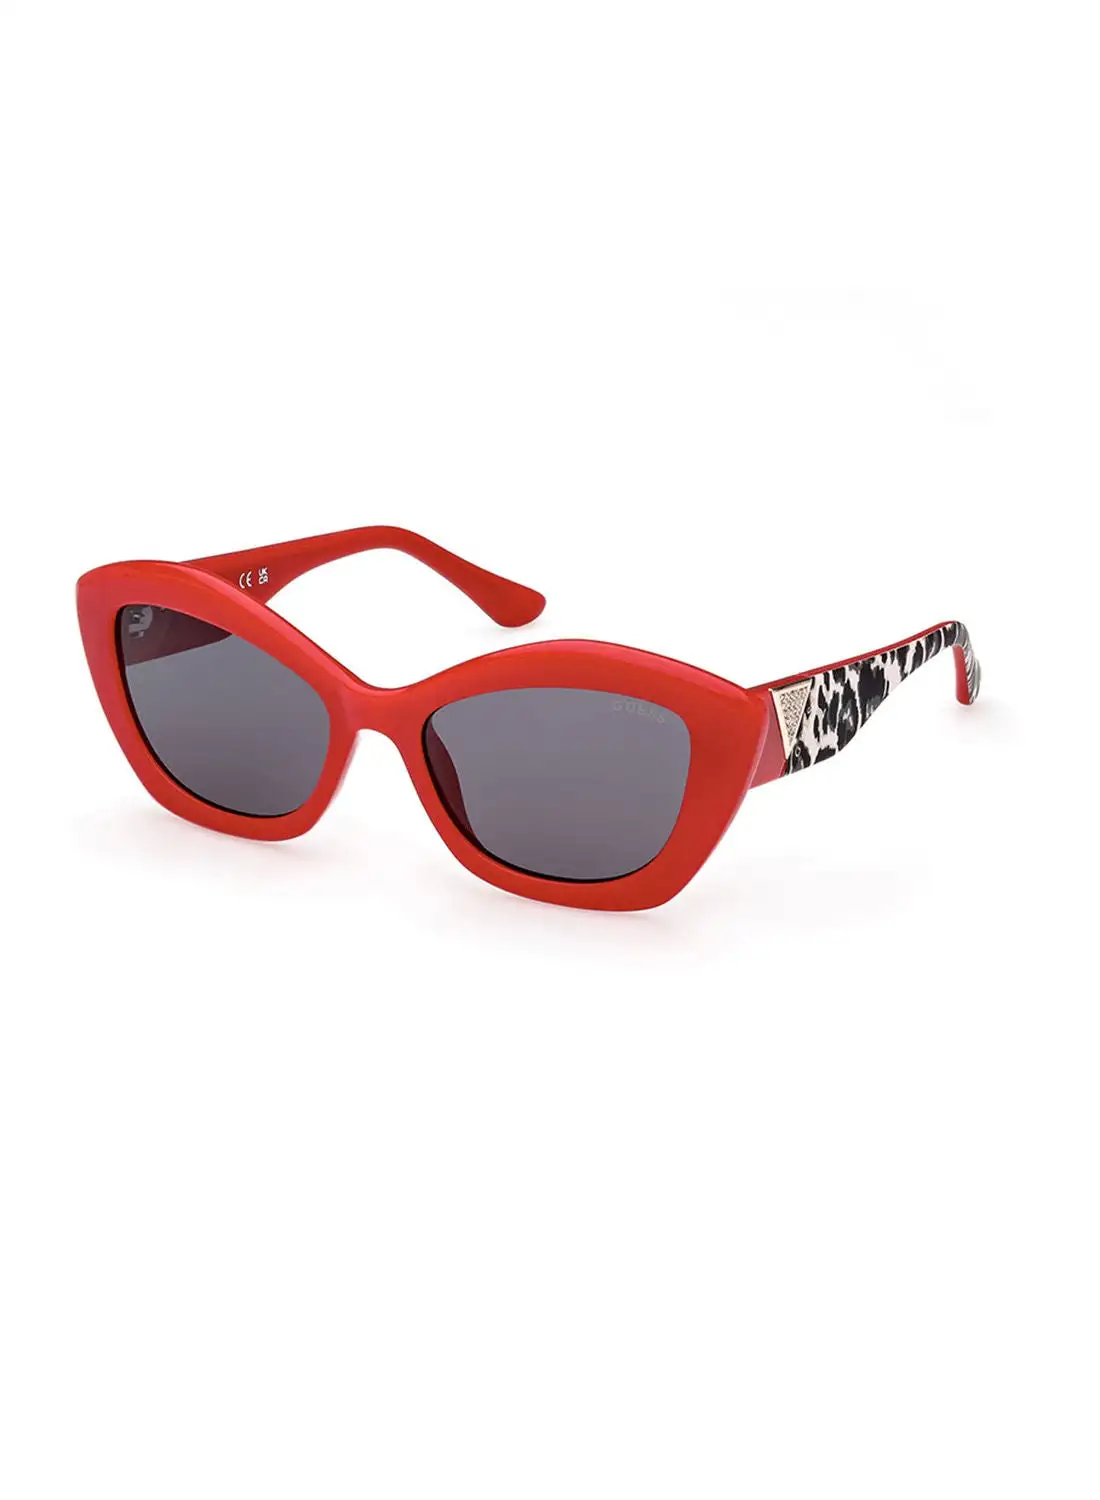 GUESS Sunglasses For Women GU786866A54